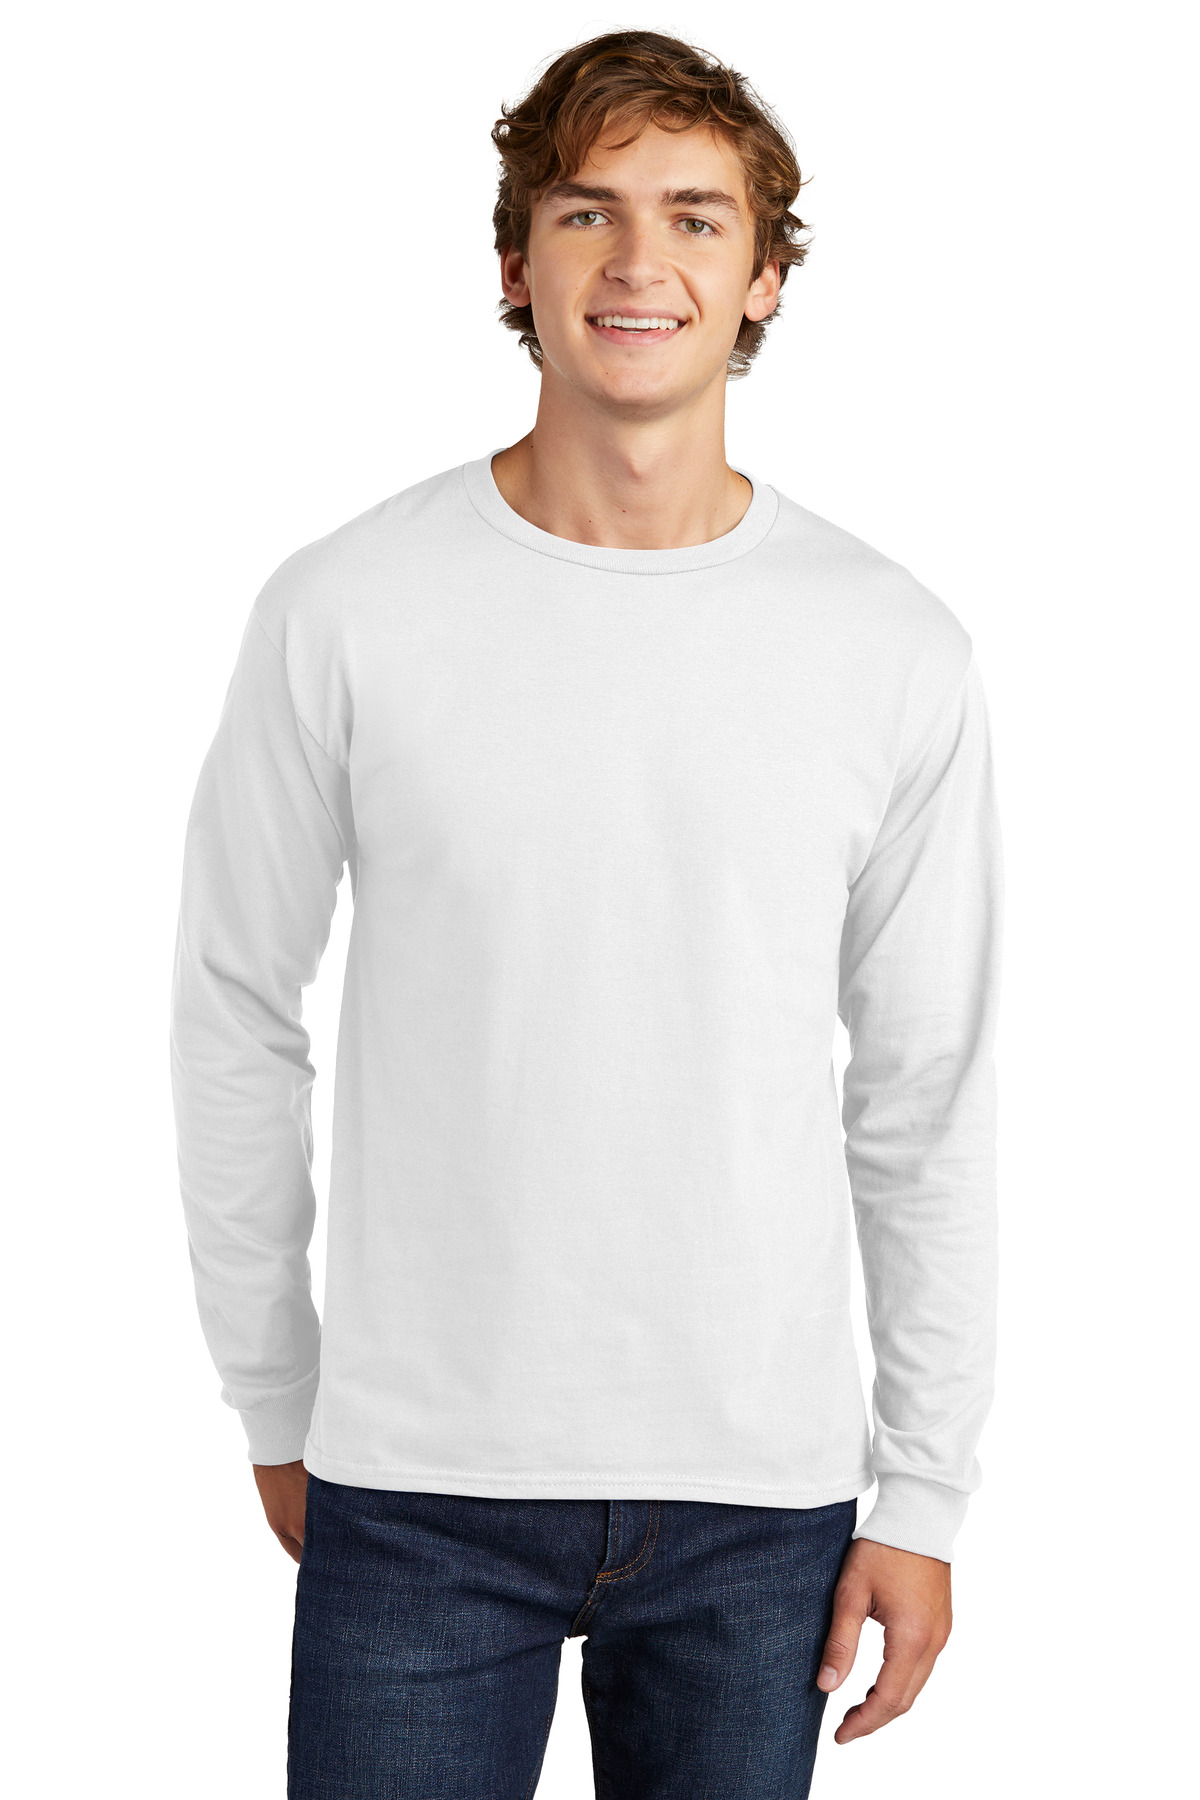 Hanes Essential-T 100% Cotton Long Sleeve T-Shirt-Hanes